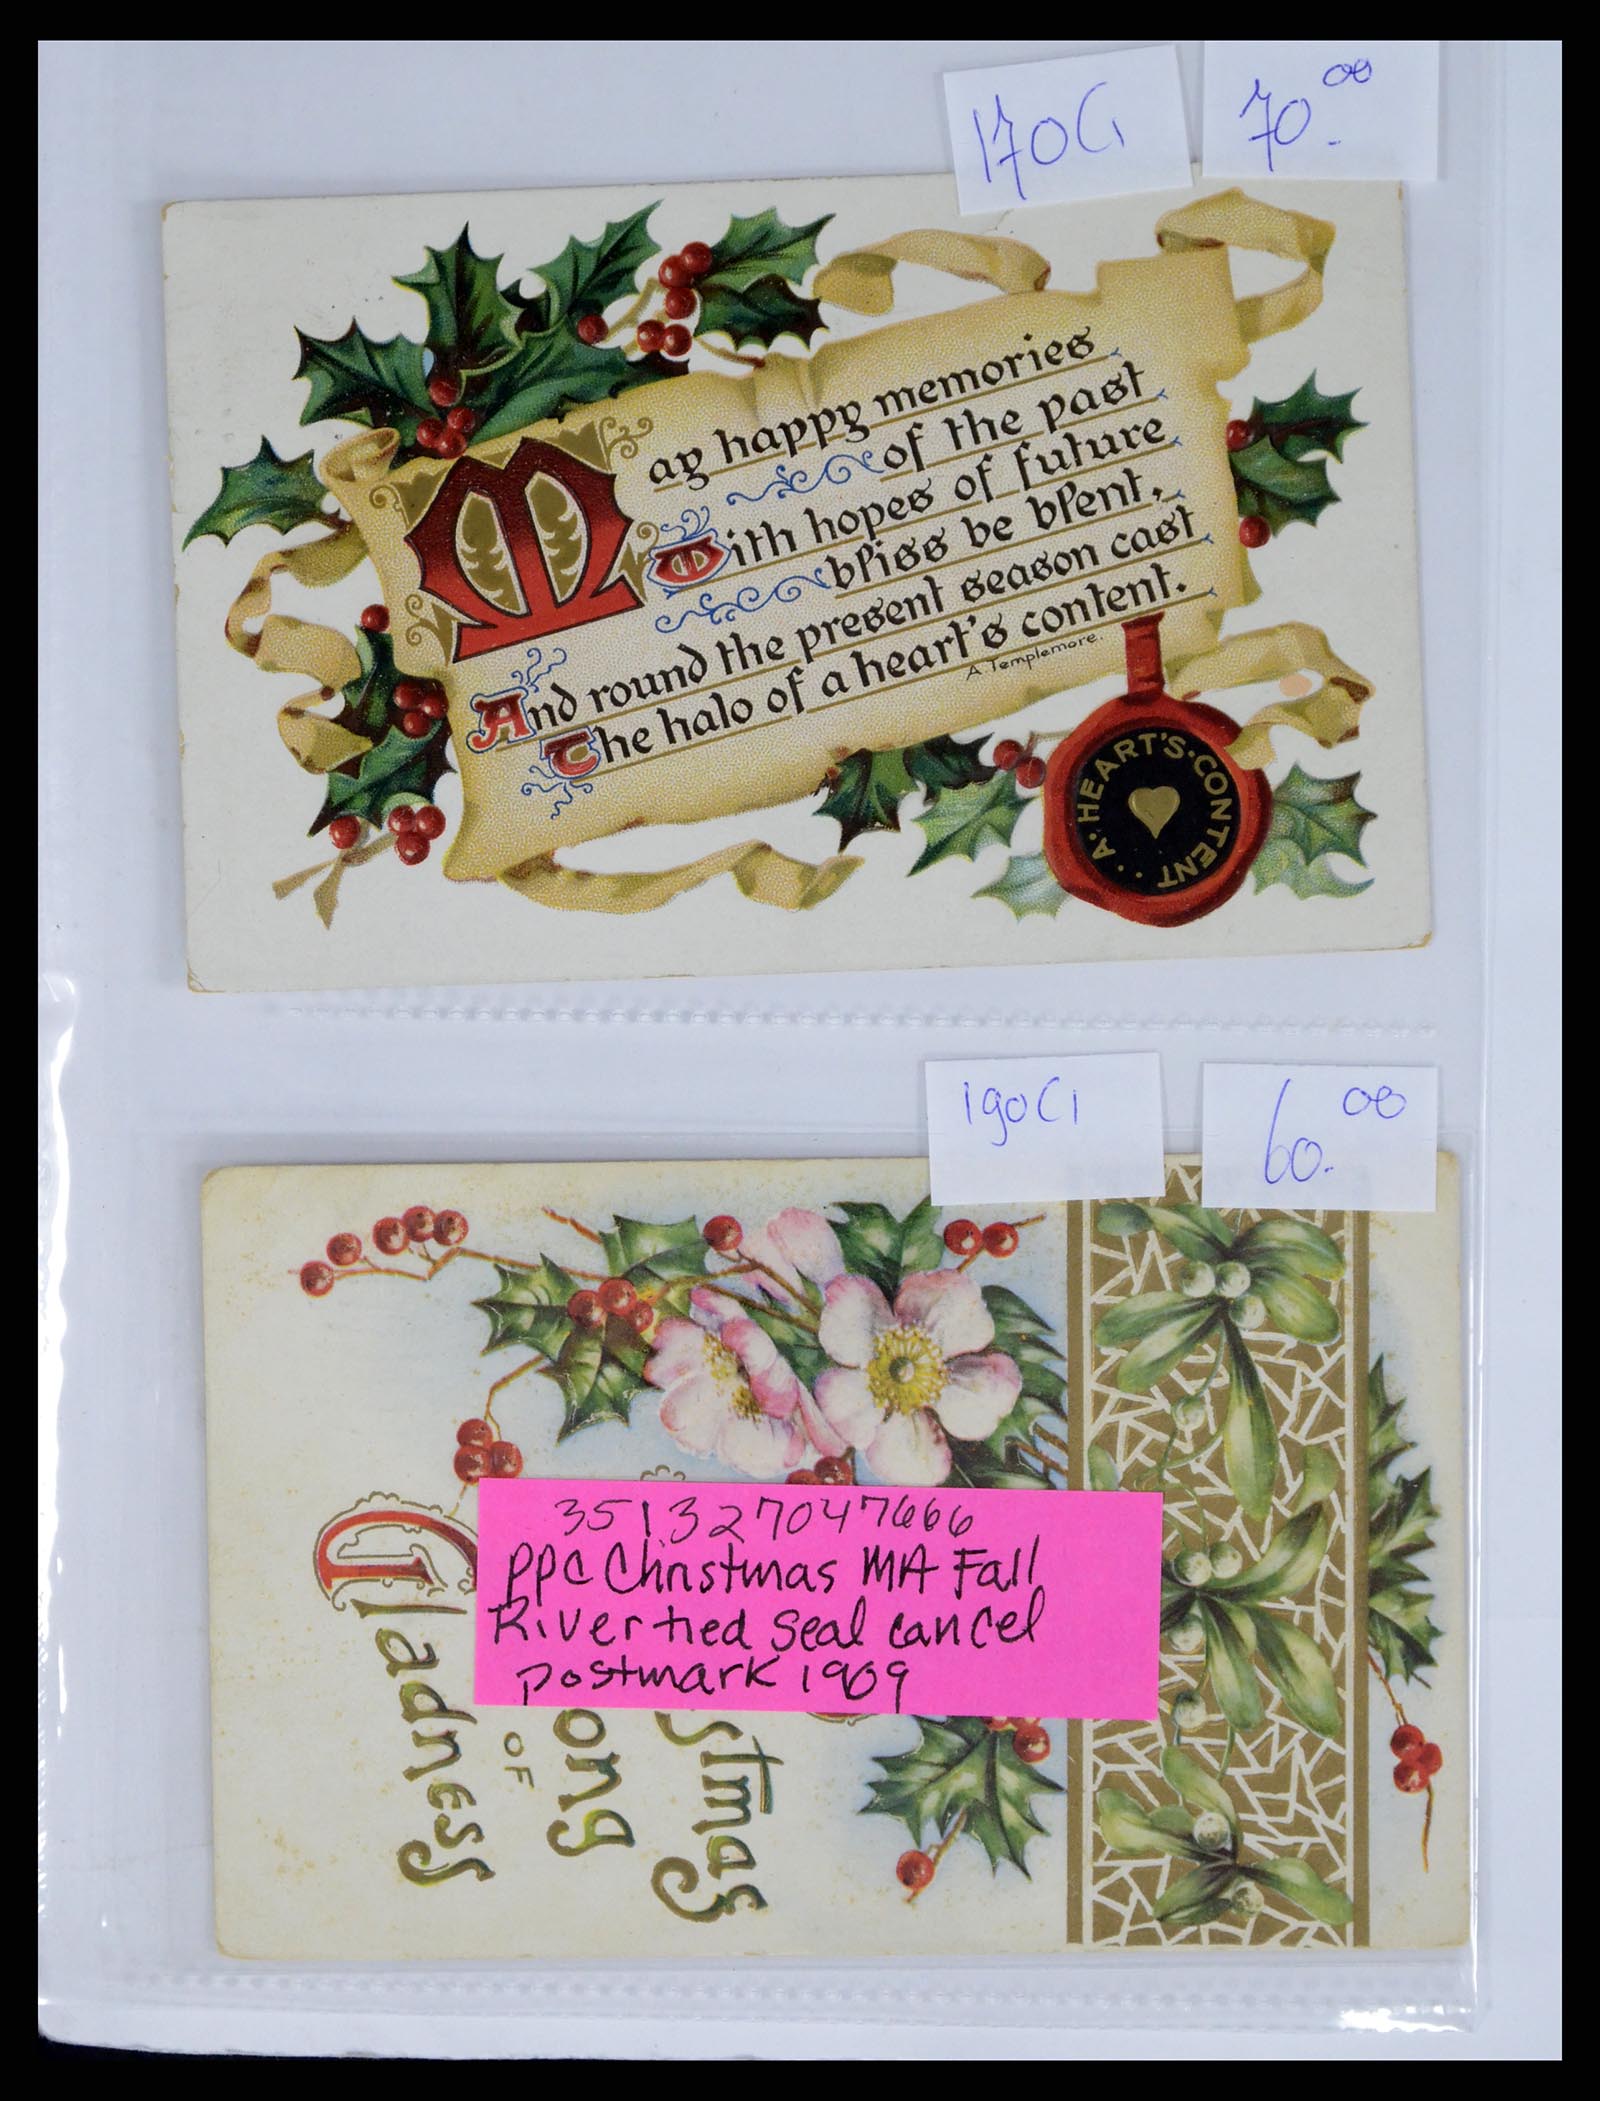 37668 061 - Stamp collection 37668 USA Christmas seals on cover 1908-2009.